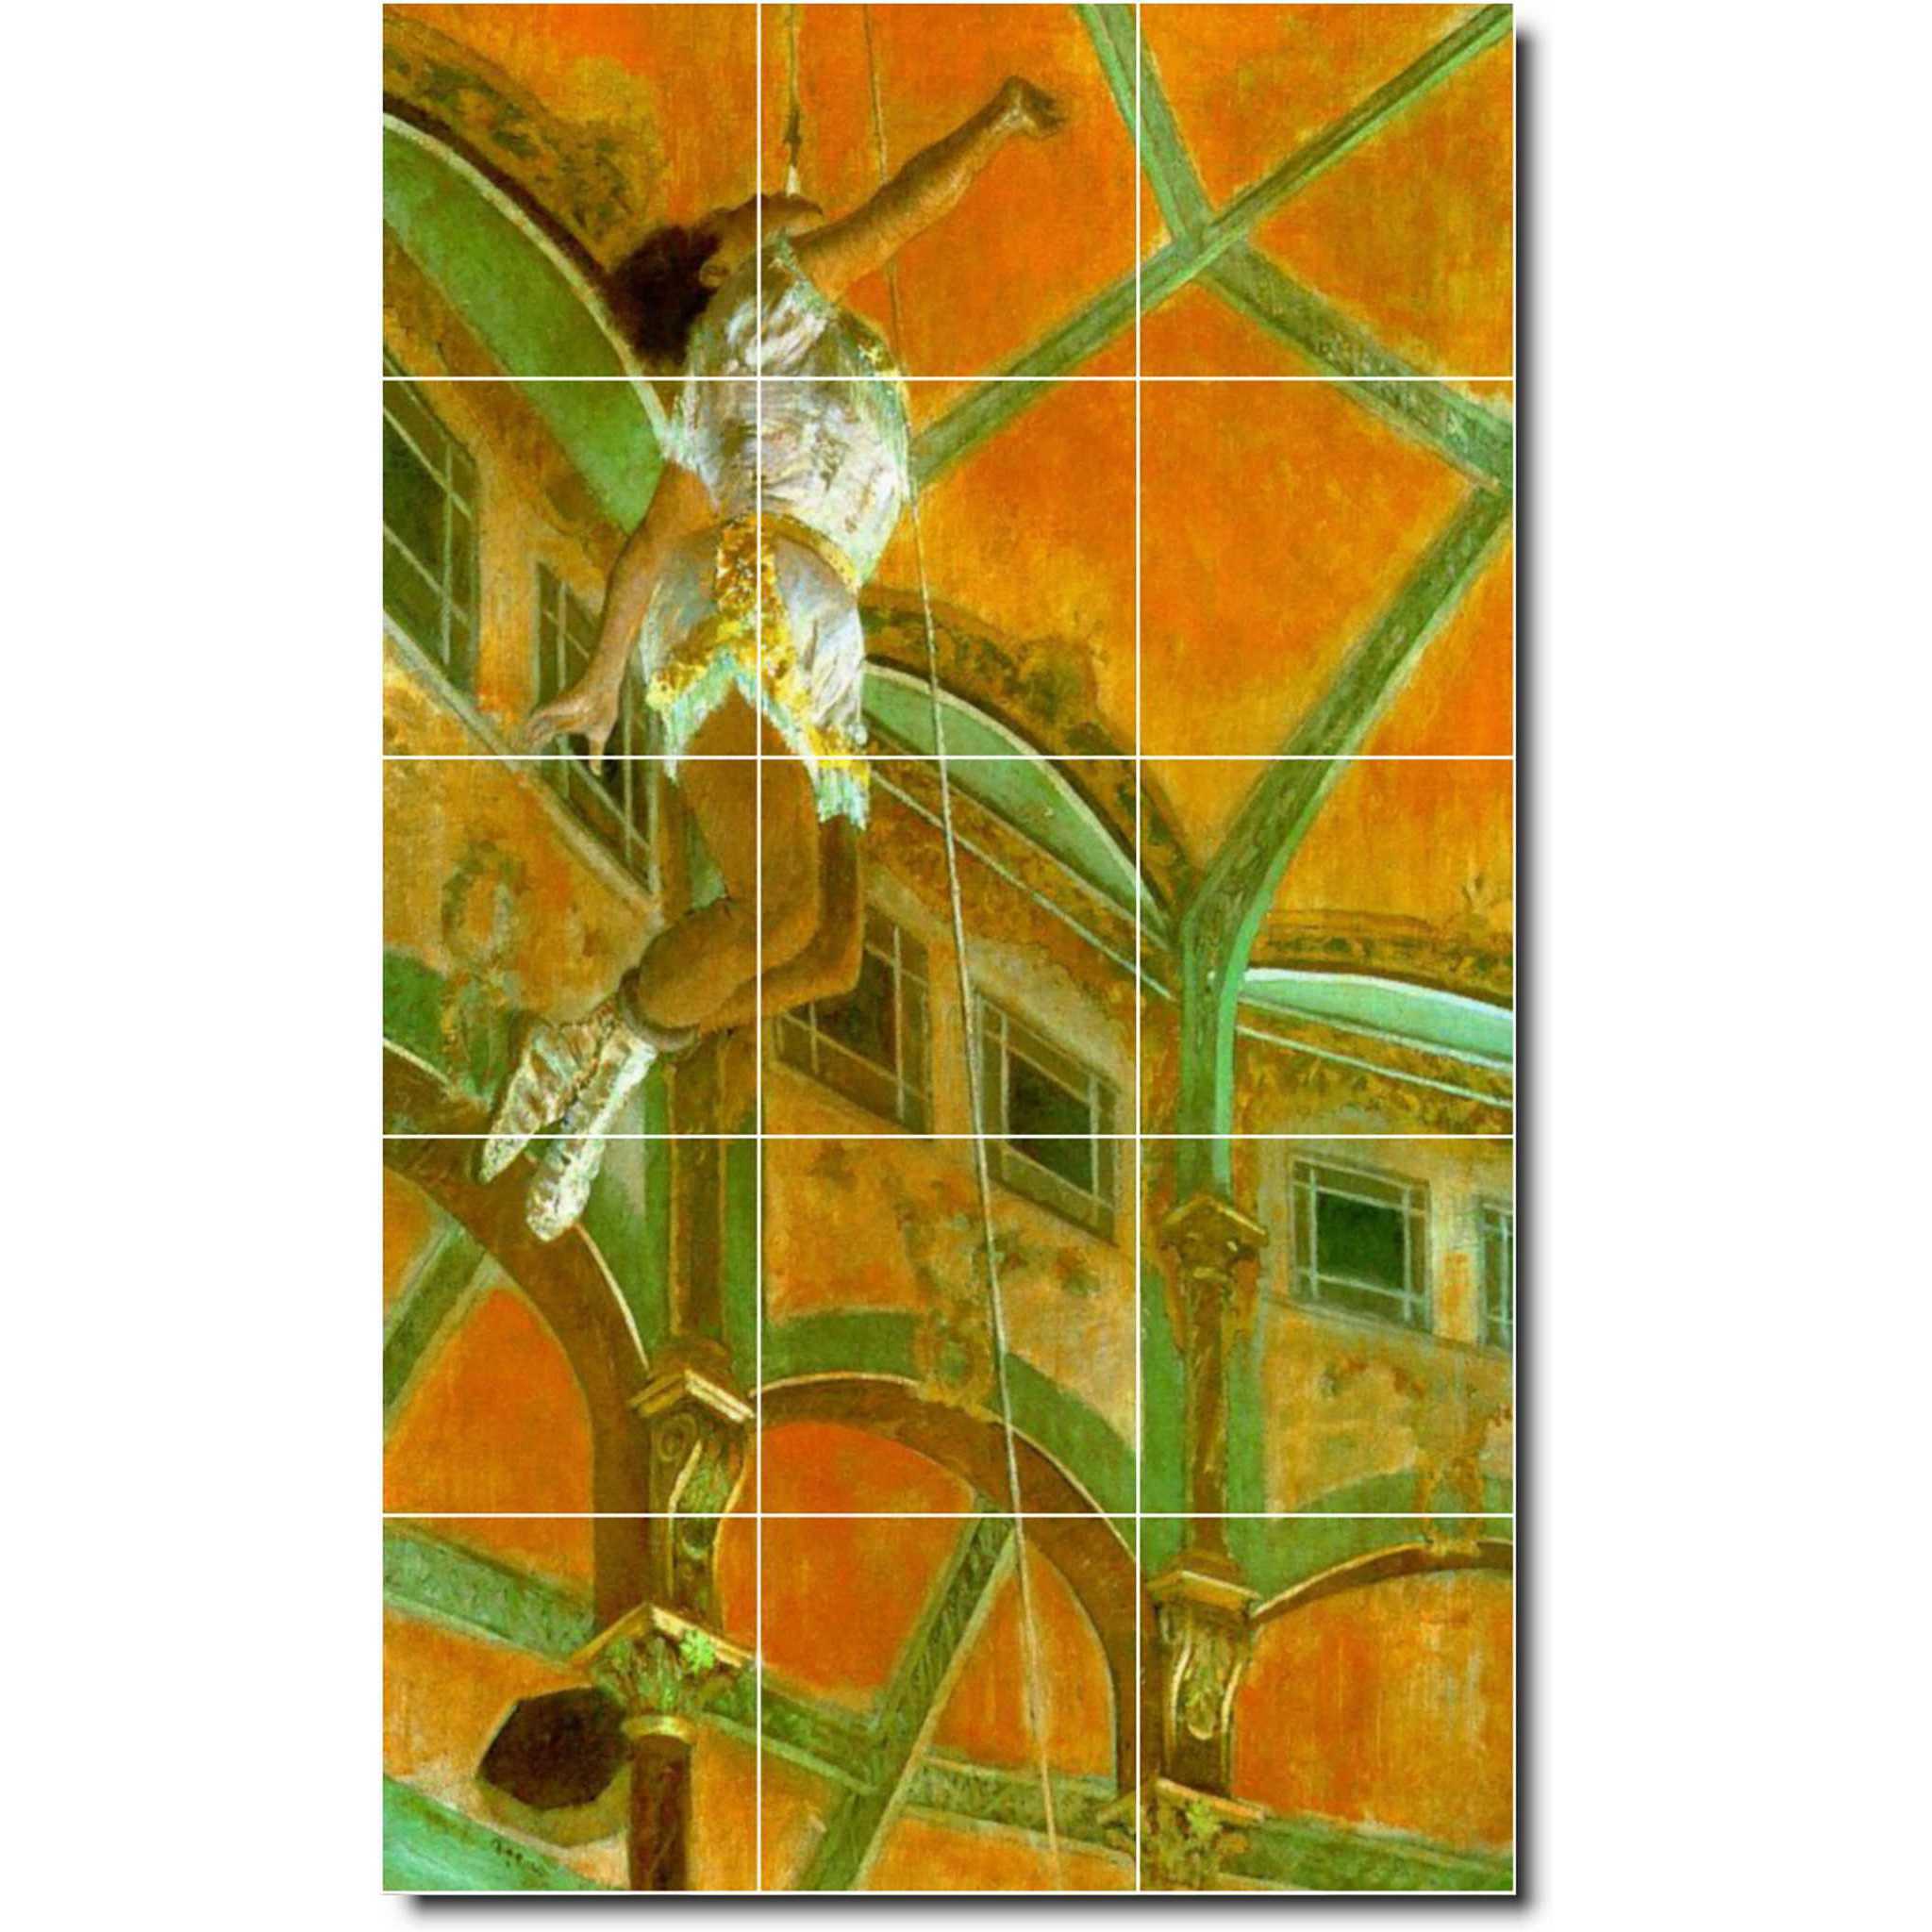 edgar degas dancer painting ceramic tile mural p02418